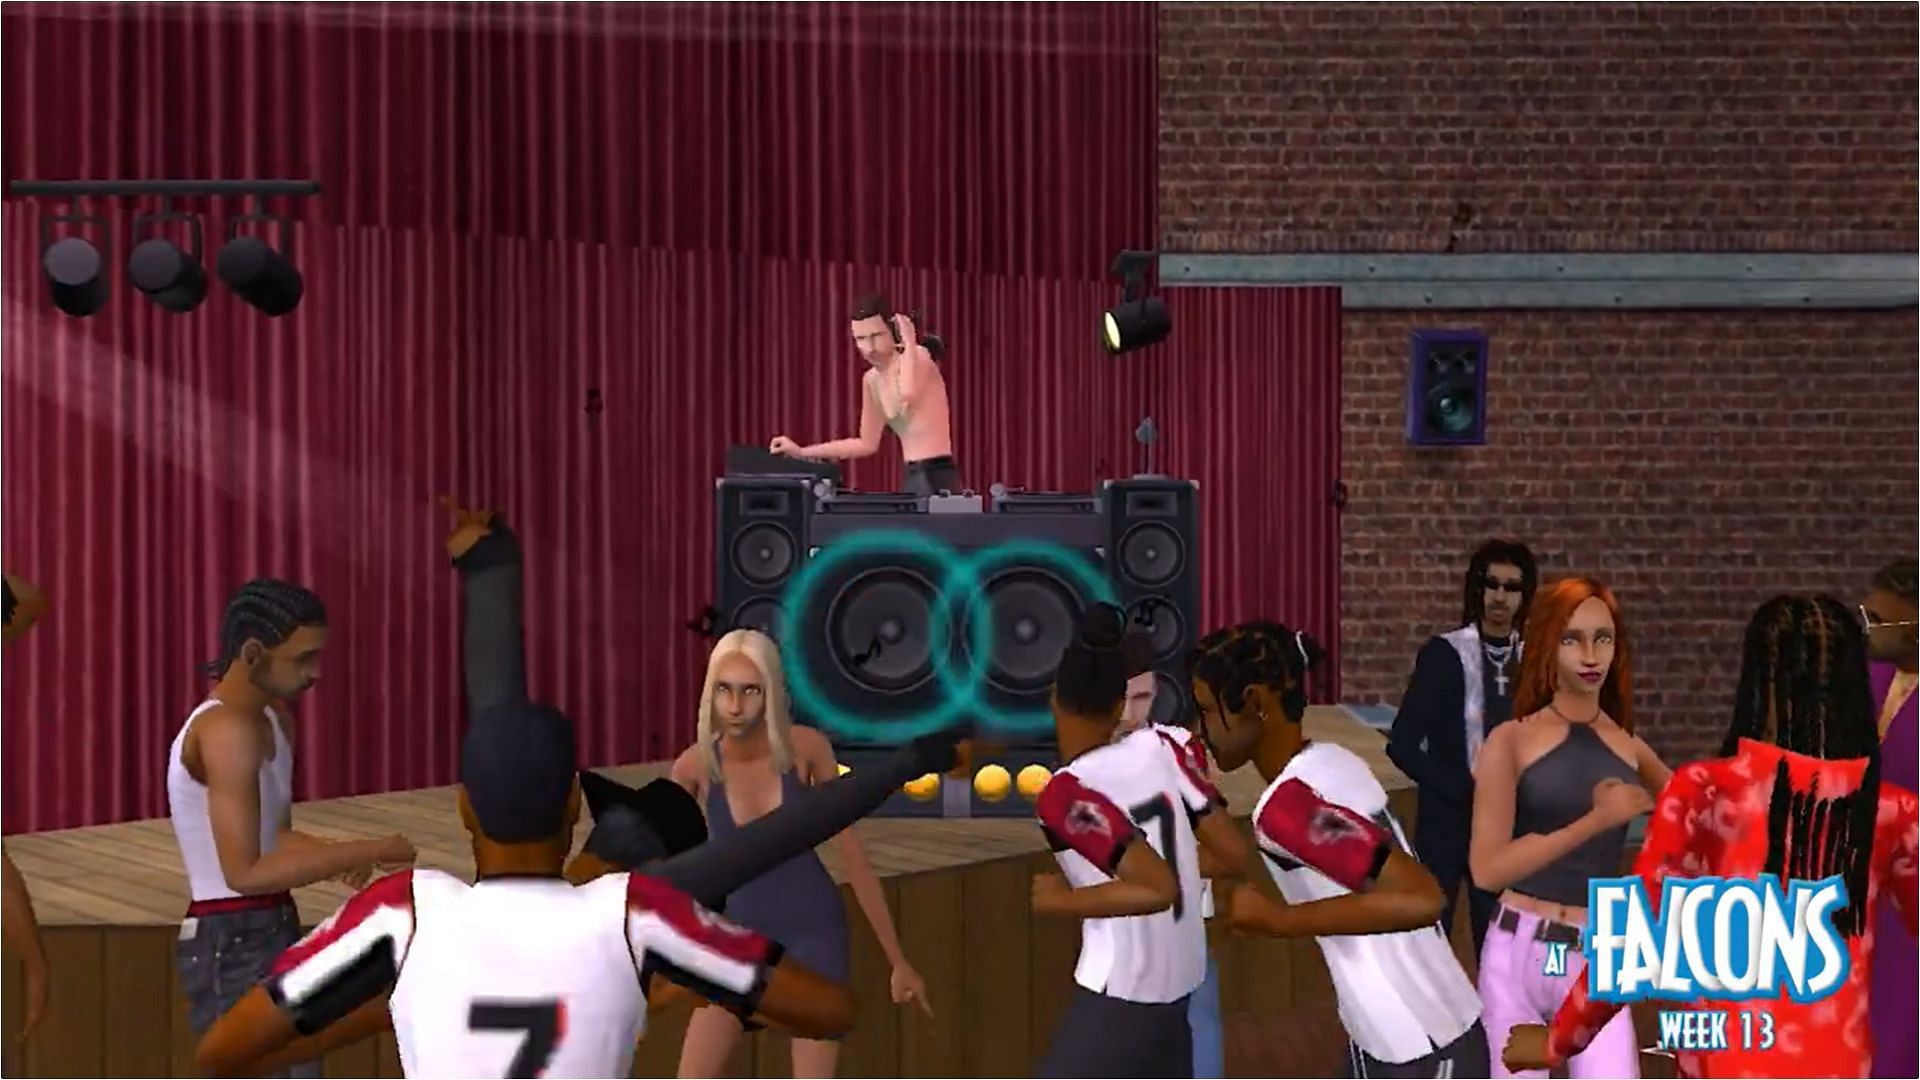 Kitk Cousins dances shirtless at the Falcons nightclub